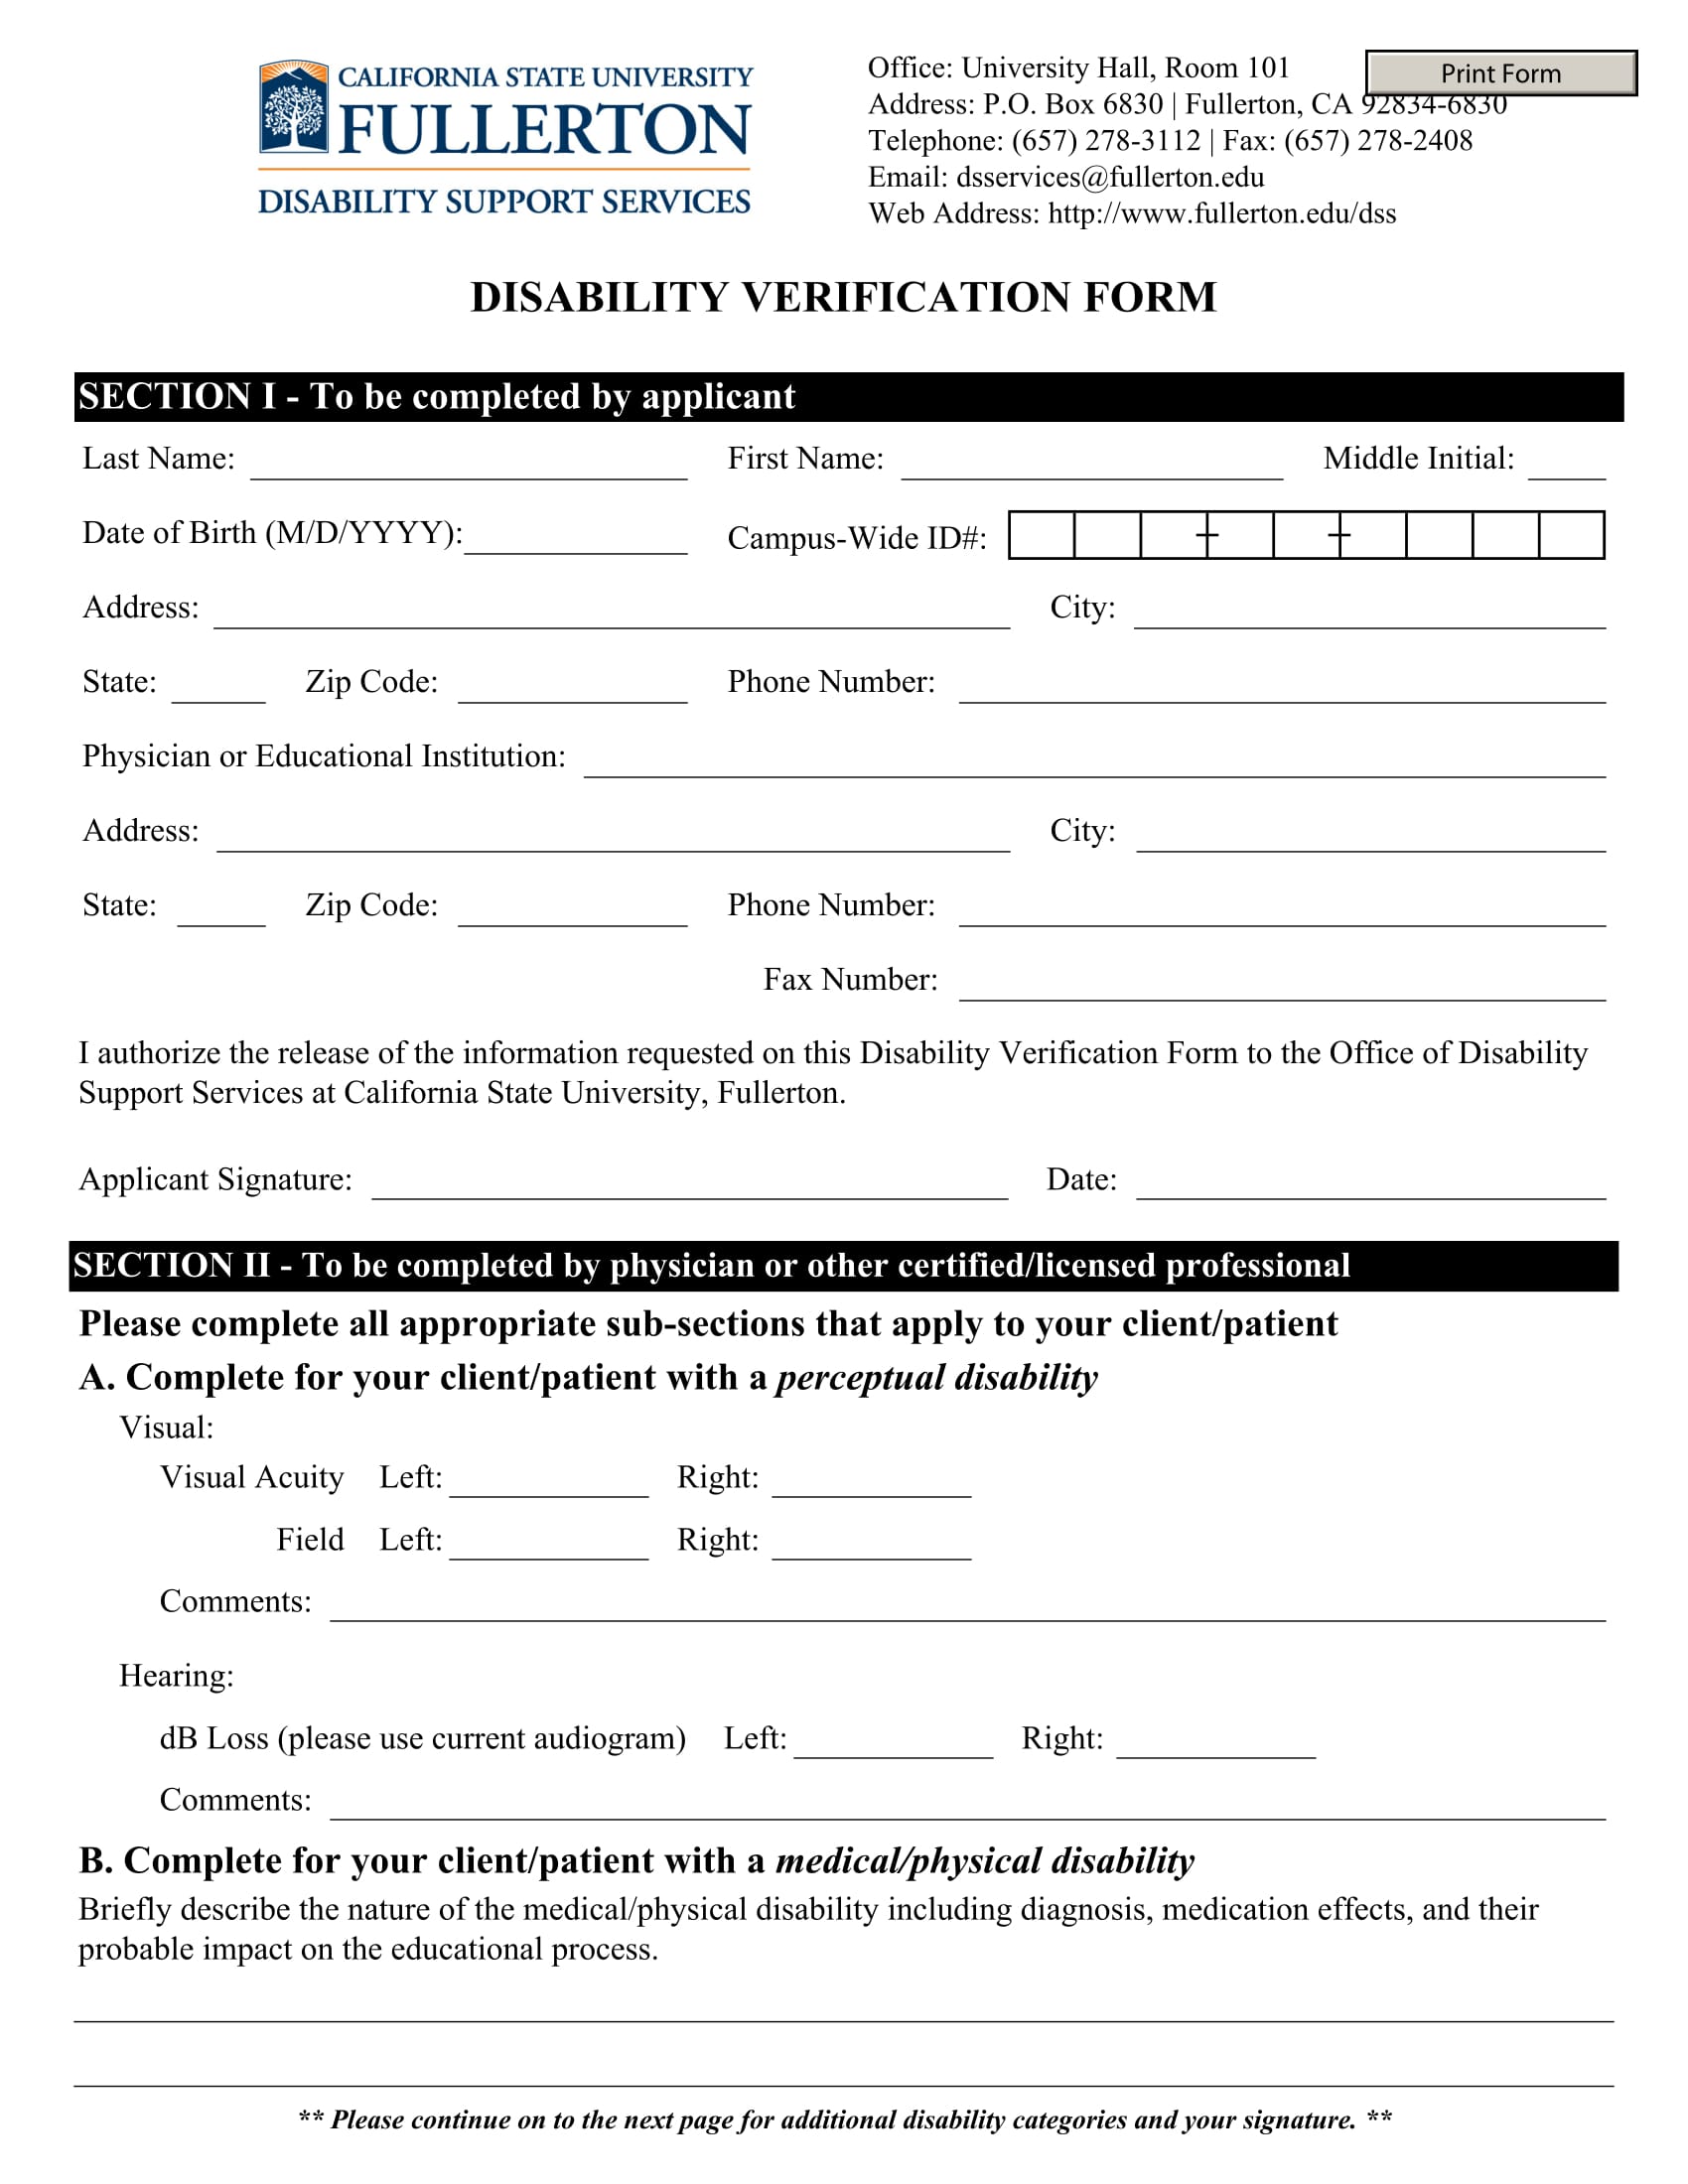 disability verification form sample 1